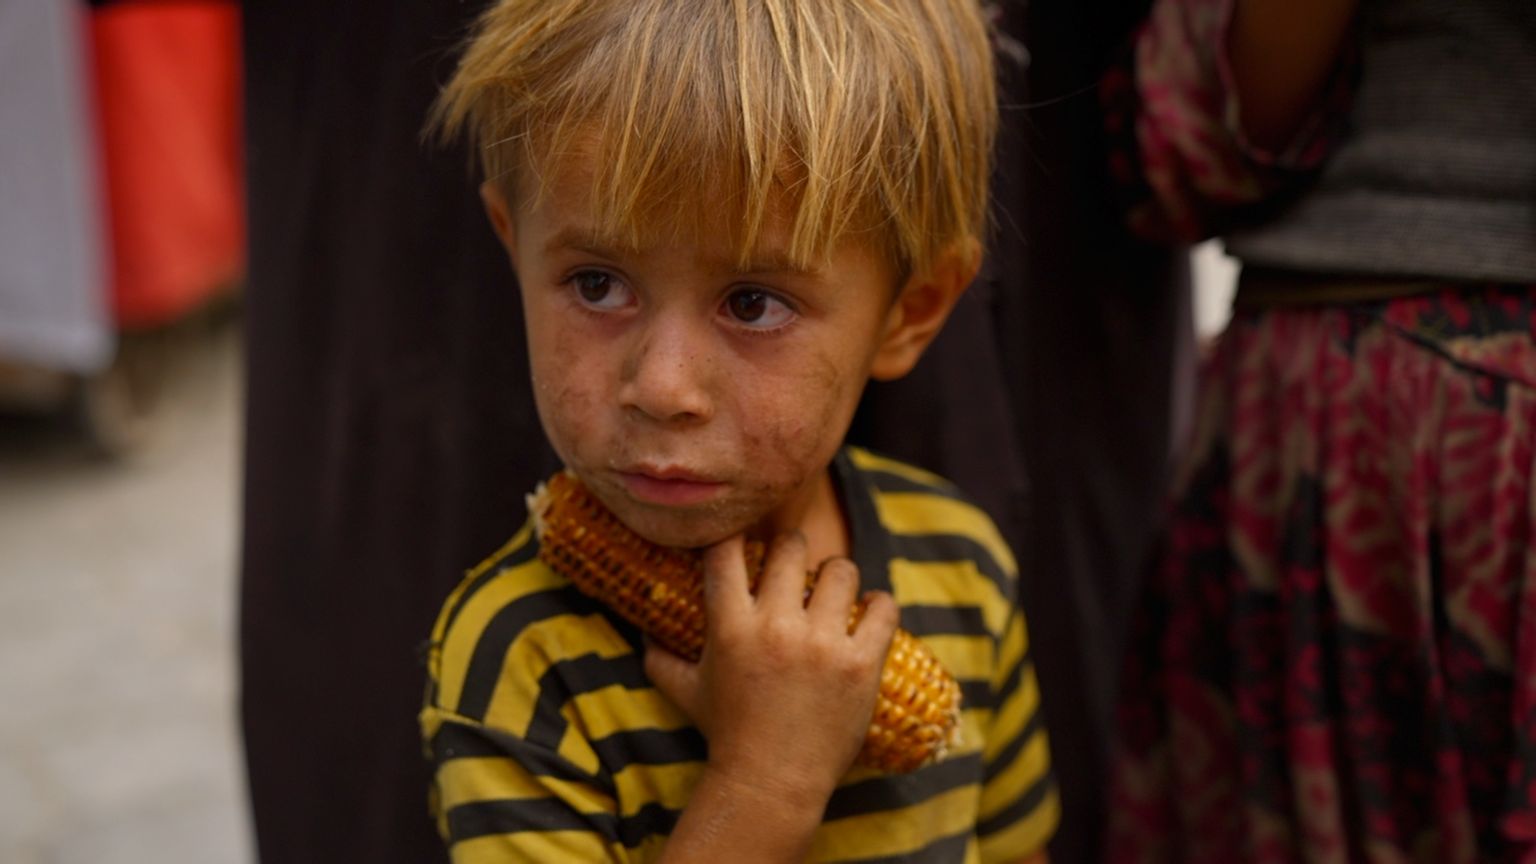 Kabul child with corn